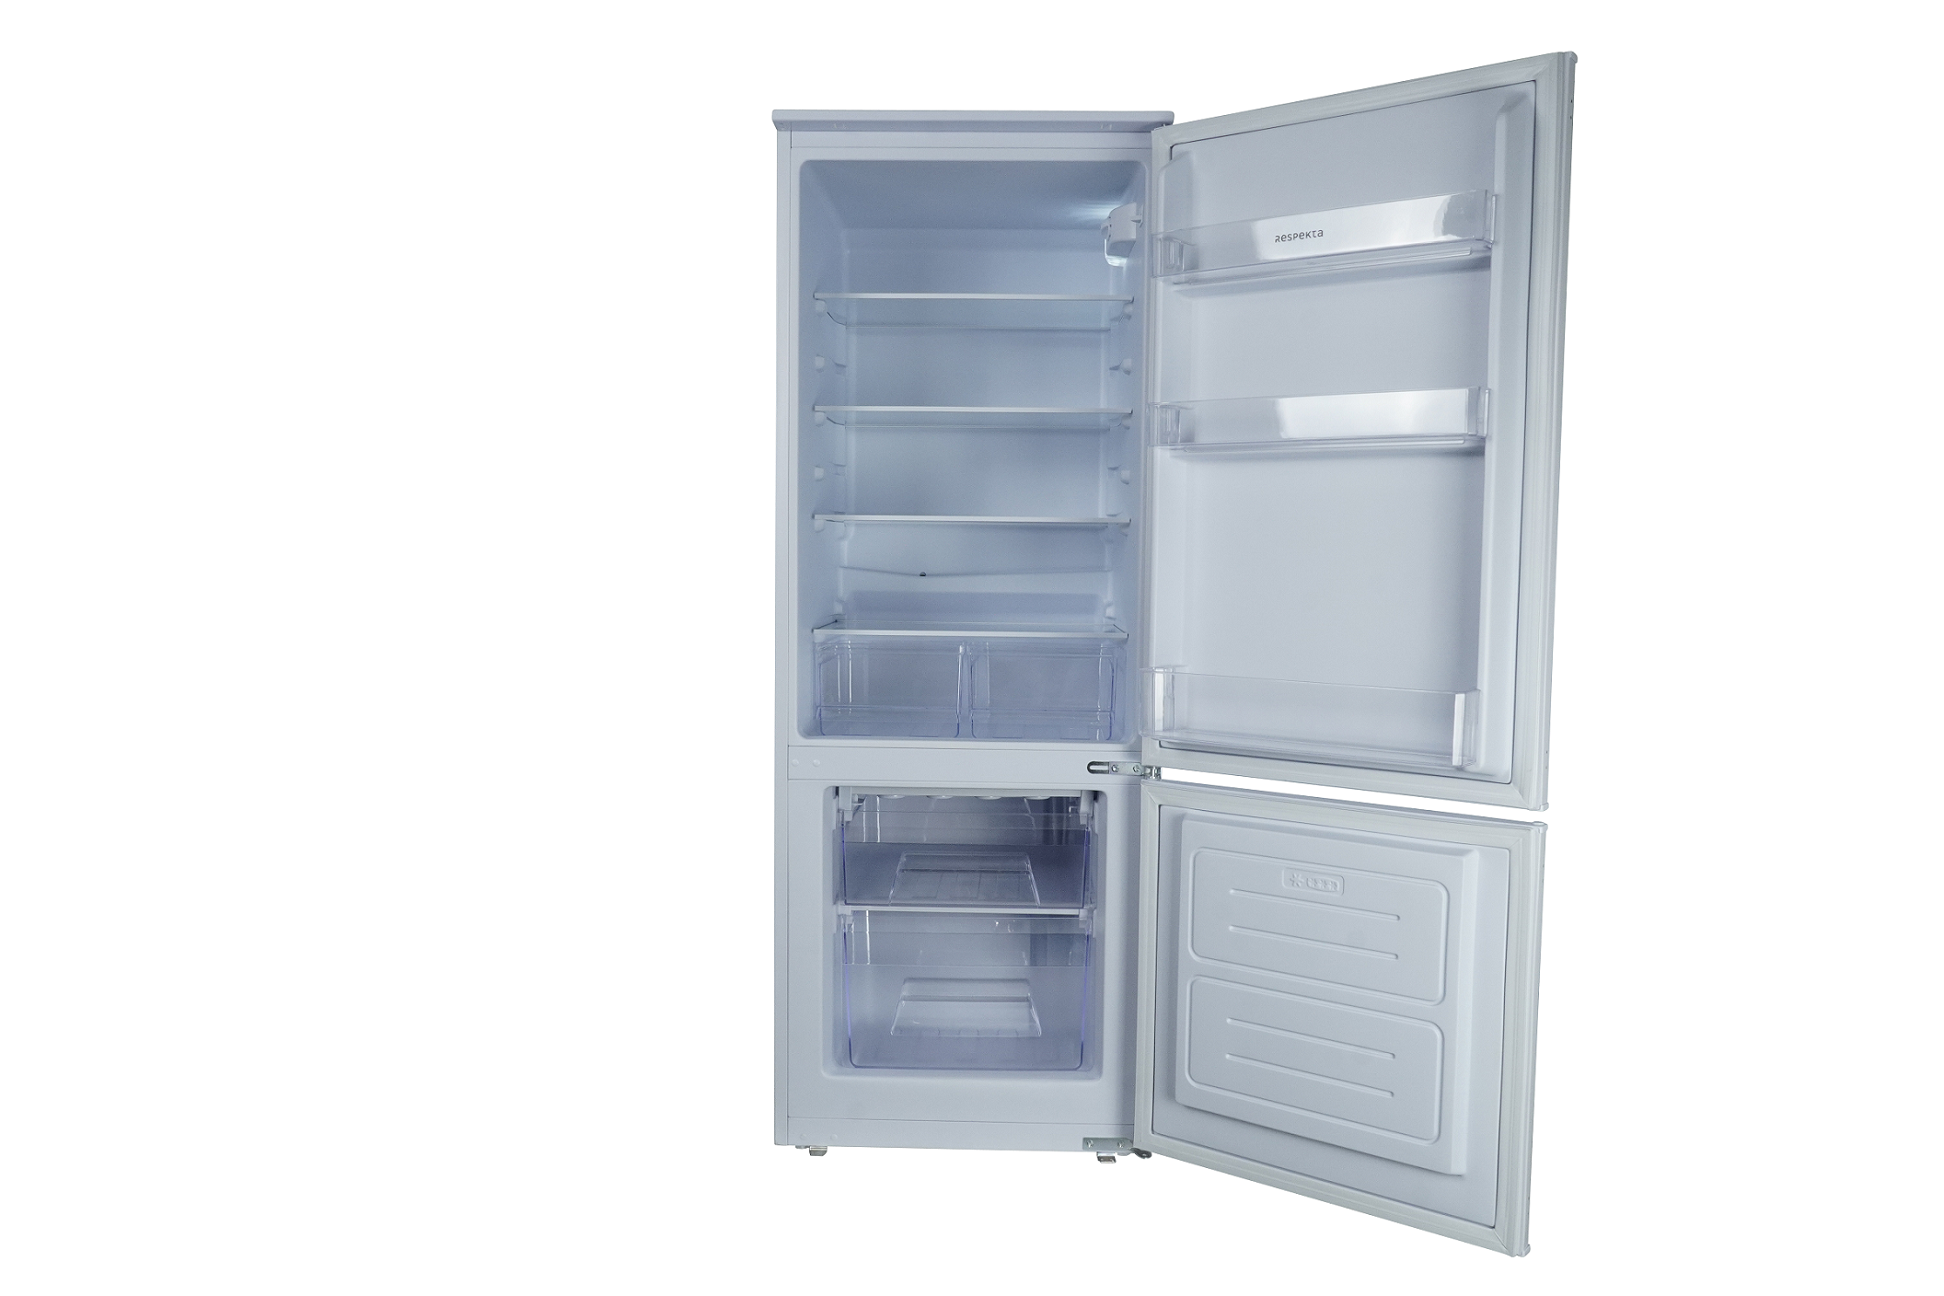 respekta Refrigerator Built-in Fridge Freezer Combination 144 cm